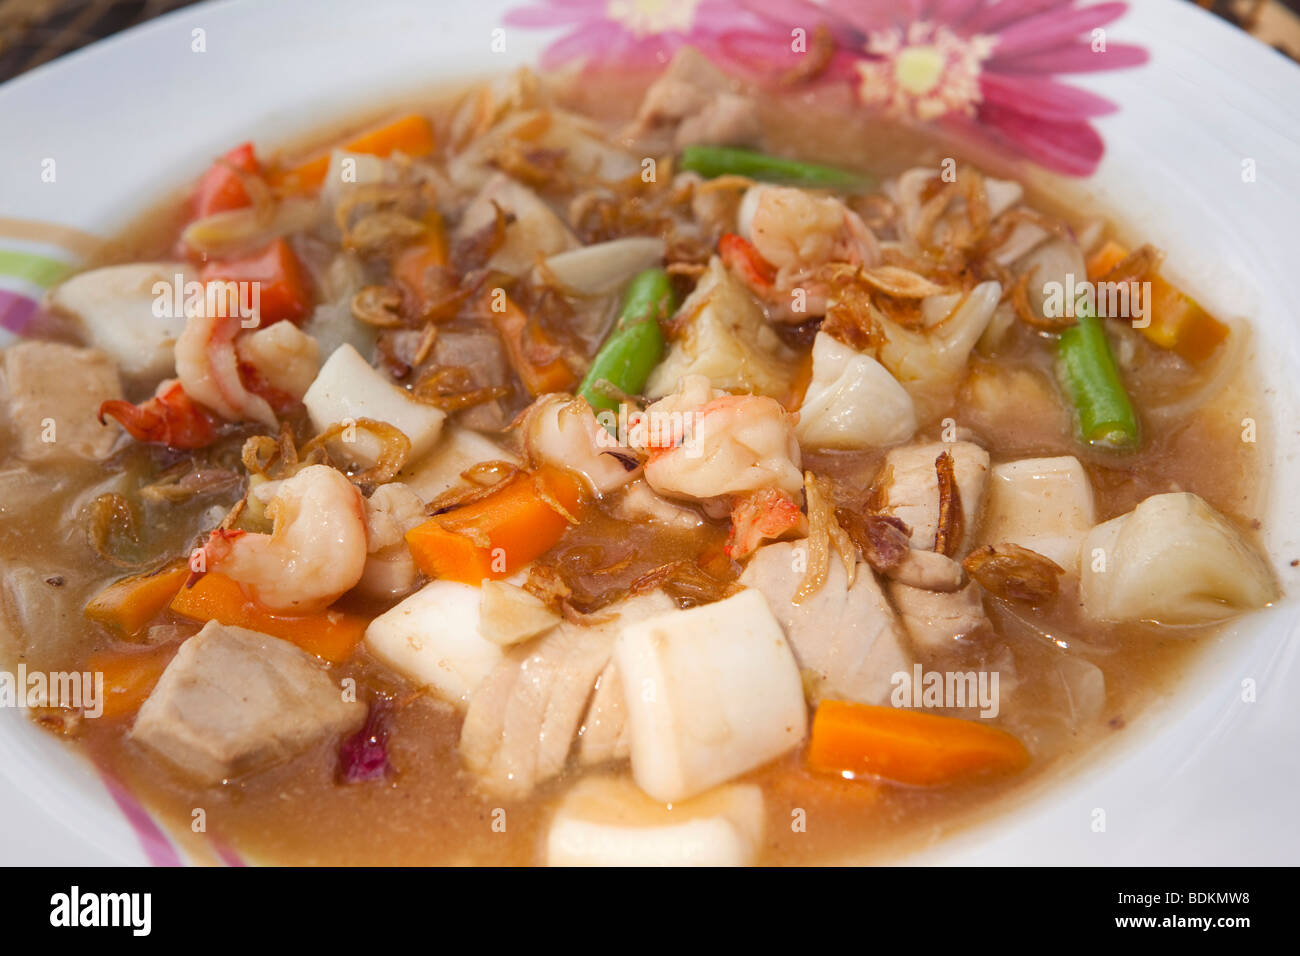 Indonesia, Lombok, Gili Trawangan, food, cap cay, stir fried vegetables with seafood Stock Photo